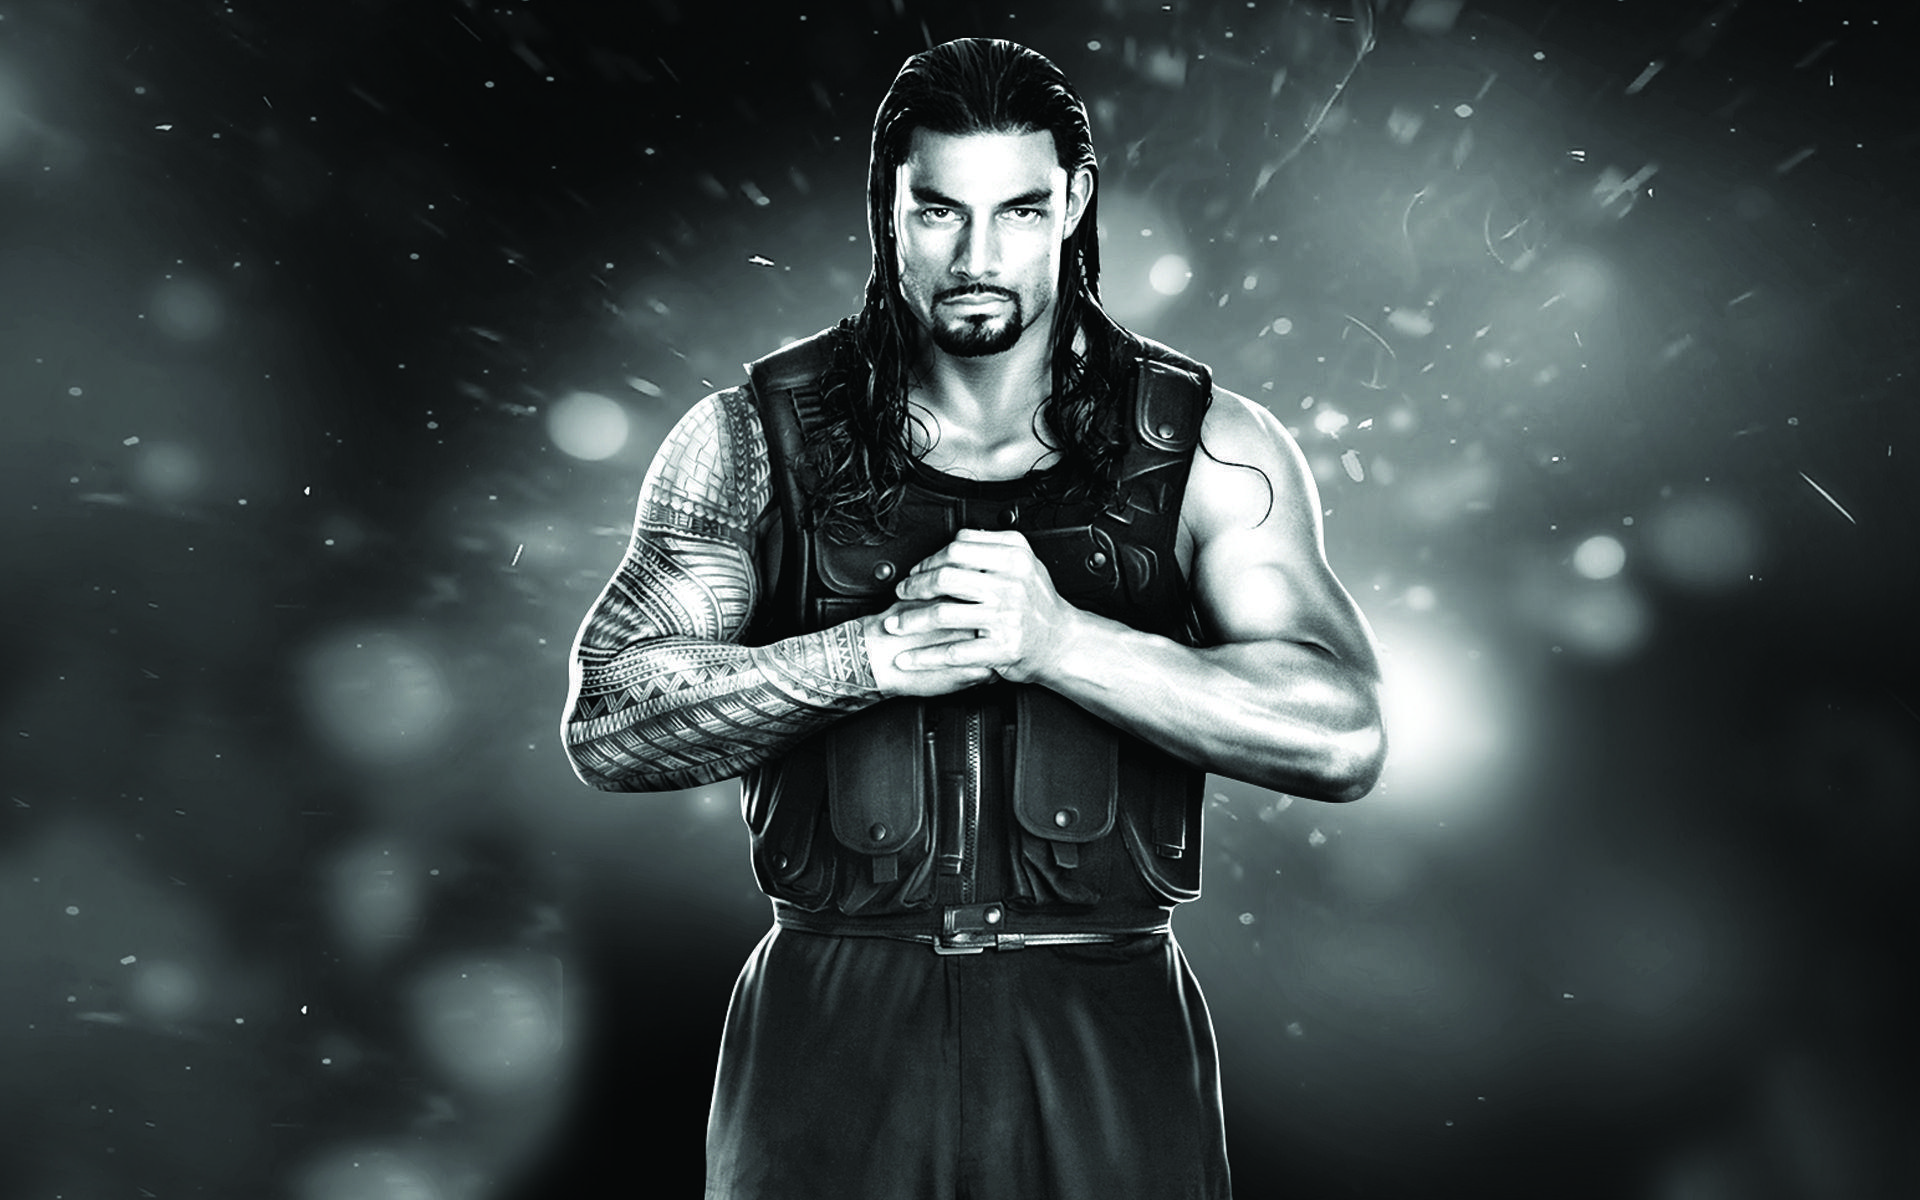 Download WWE Roman Reigns 2016 Wallpaper for Desktop